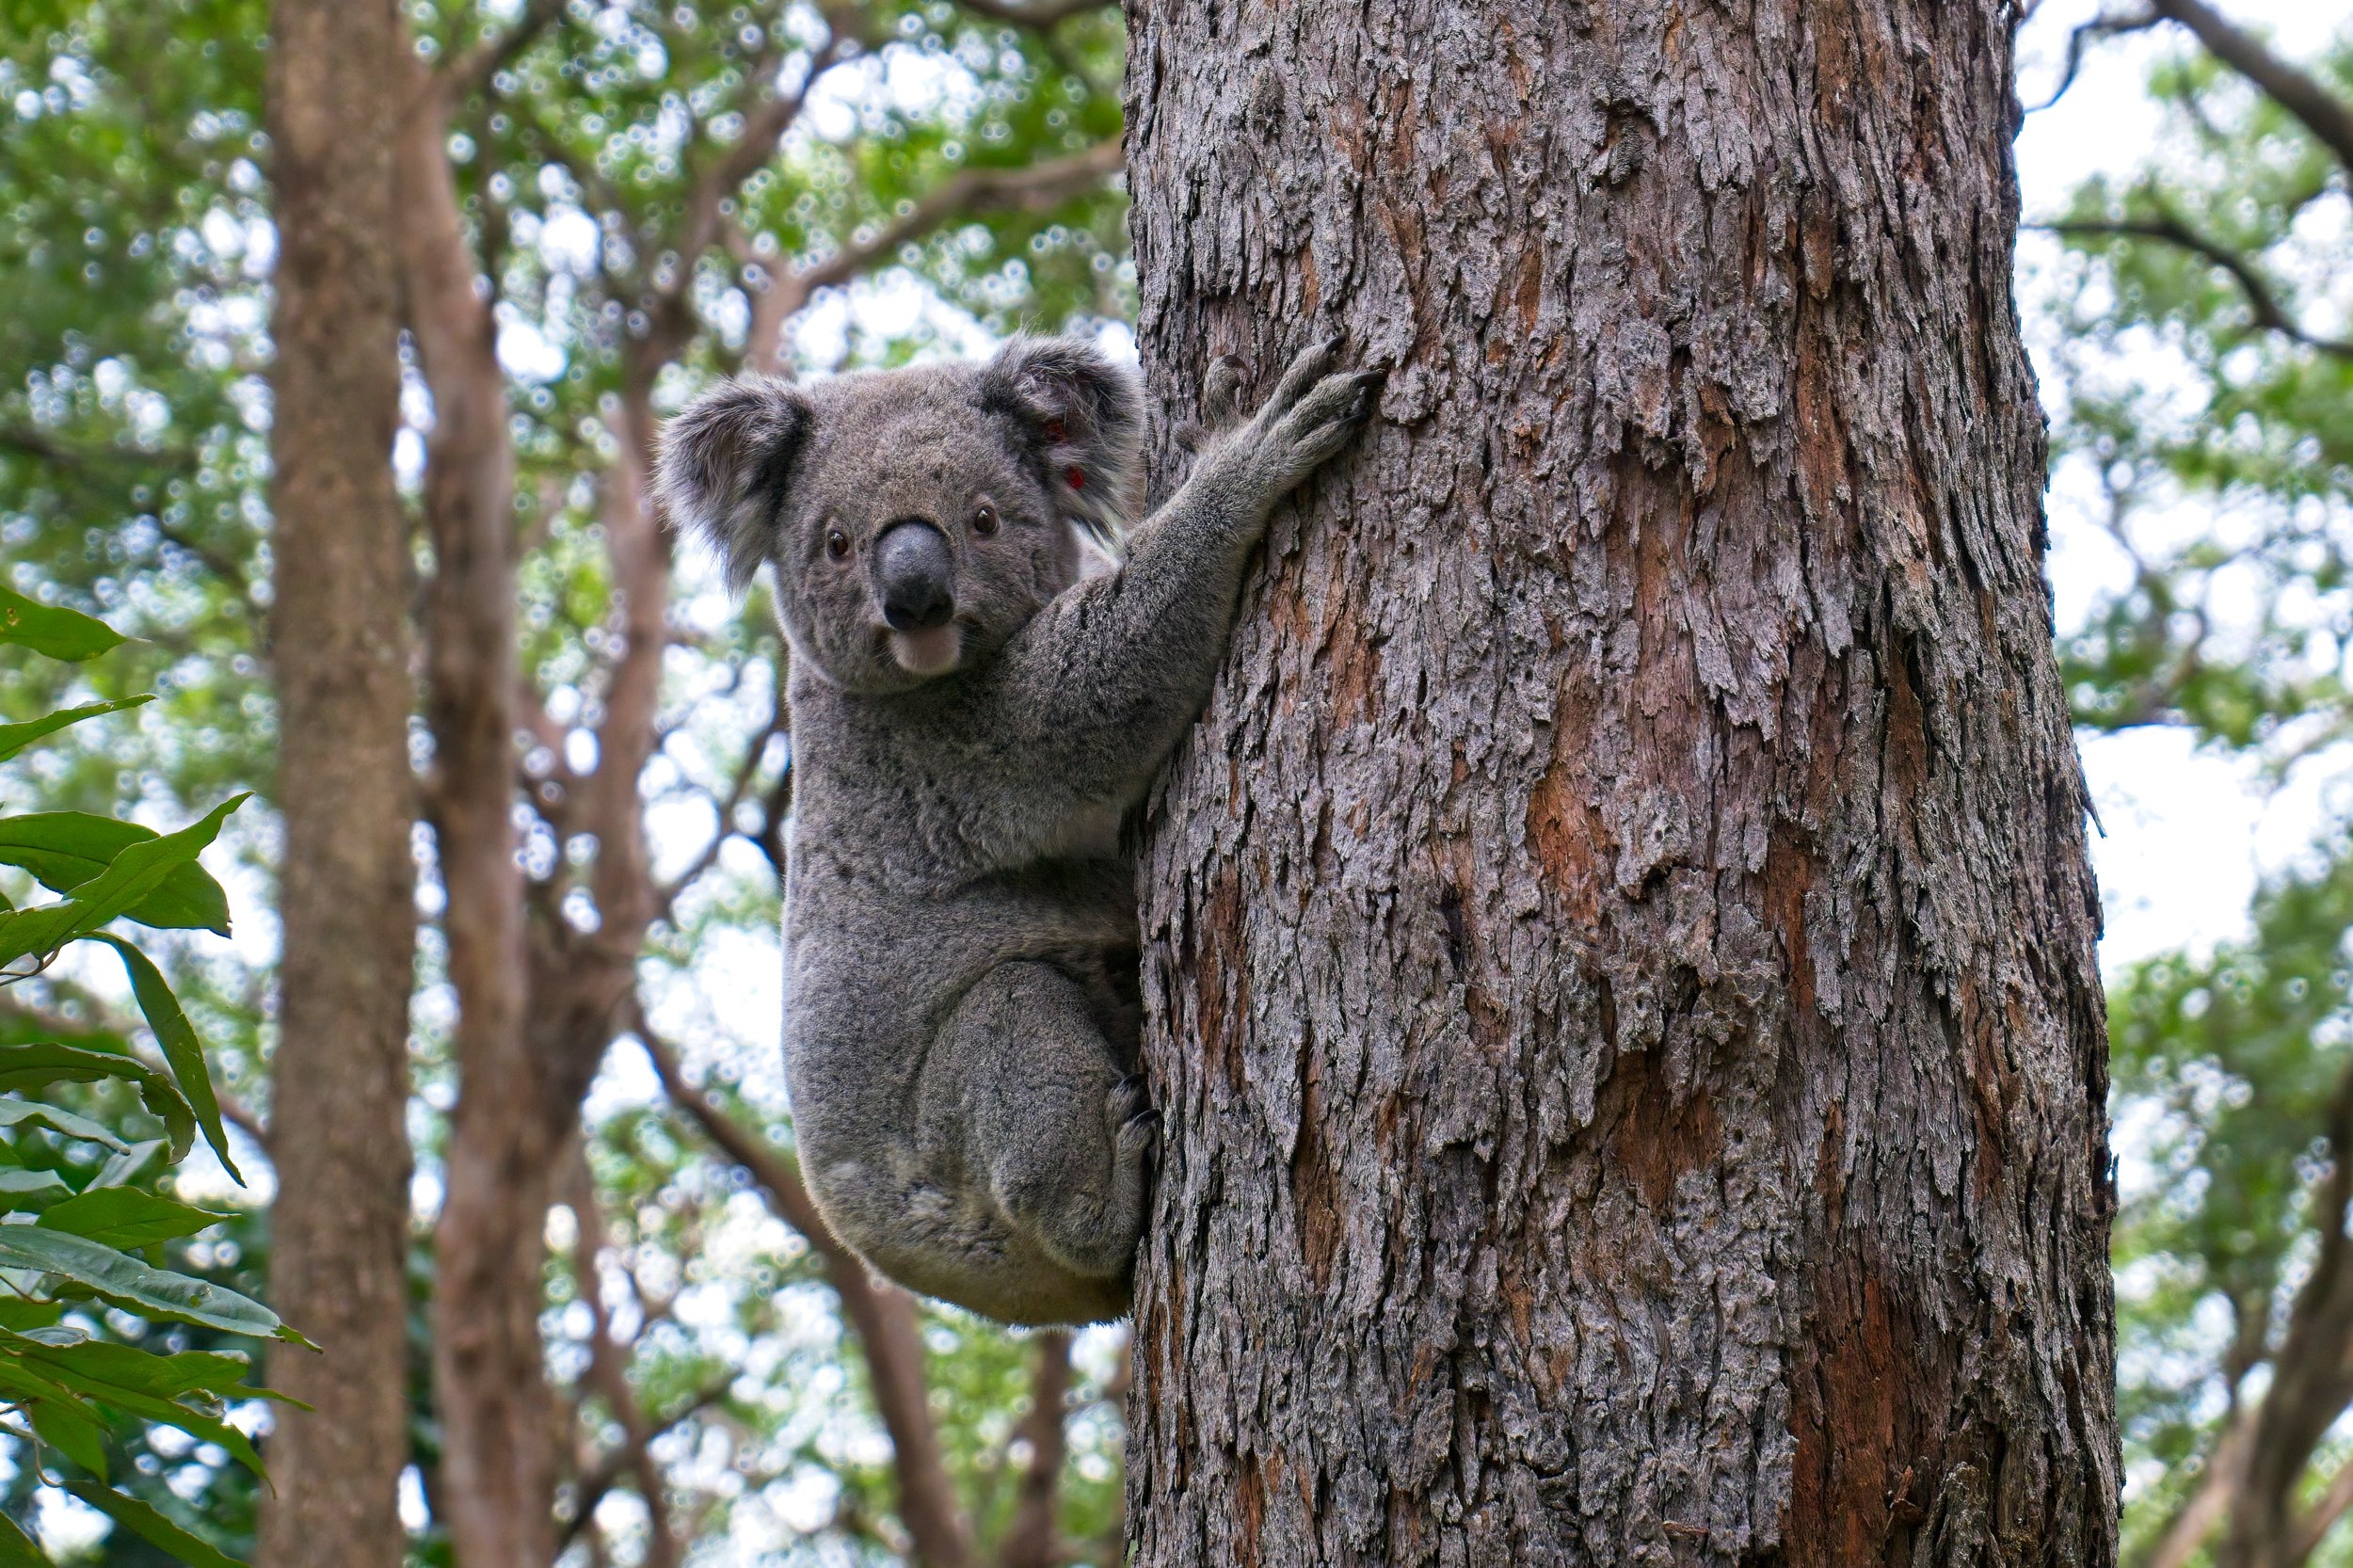 A koala clinging to a tree